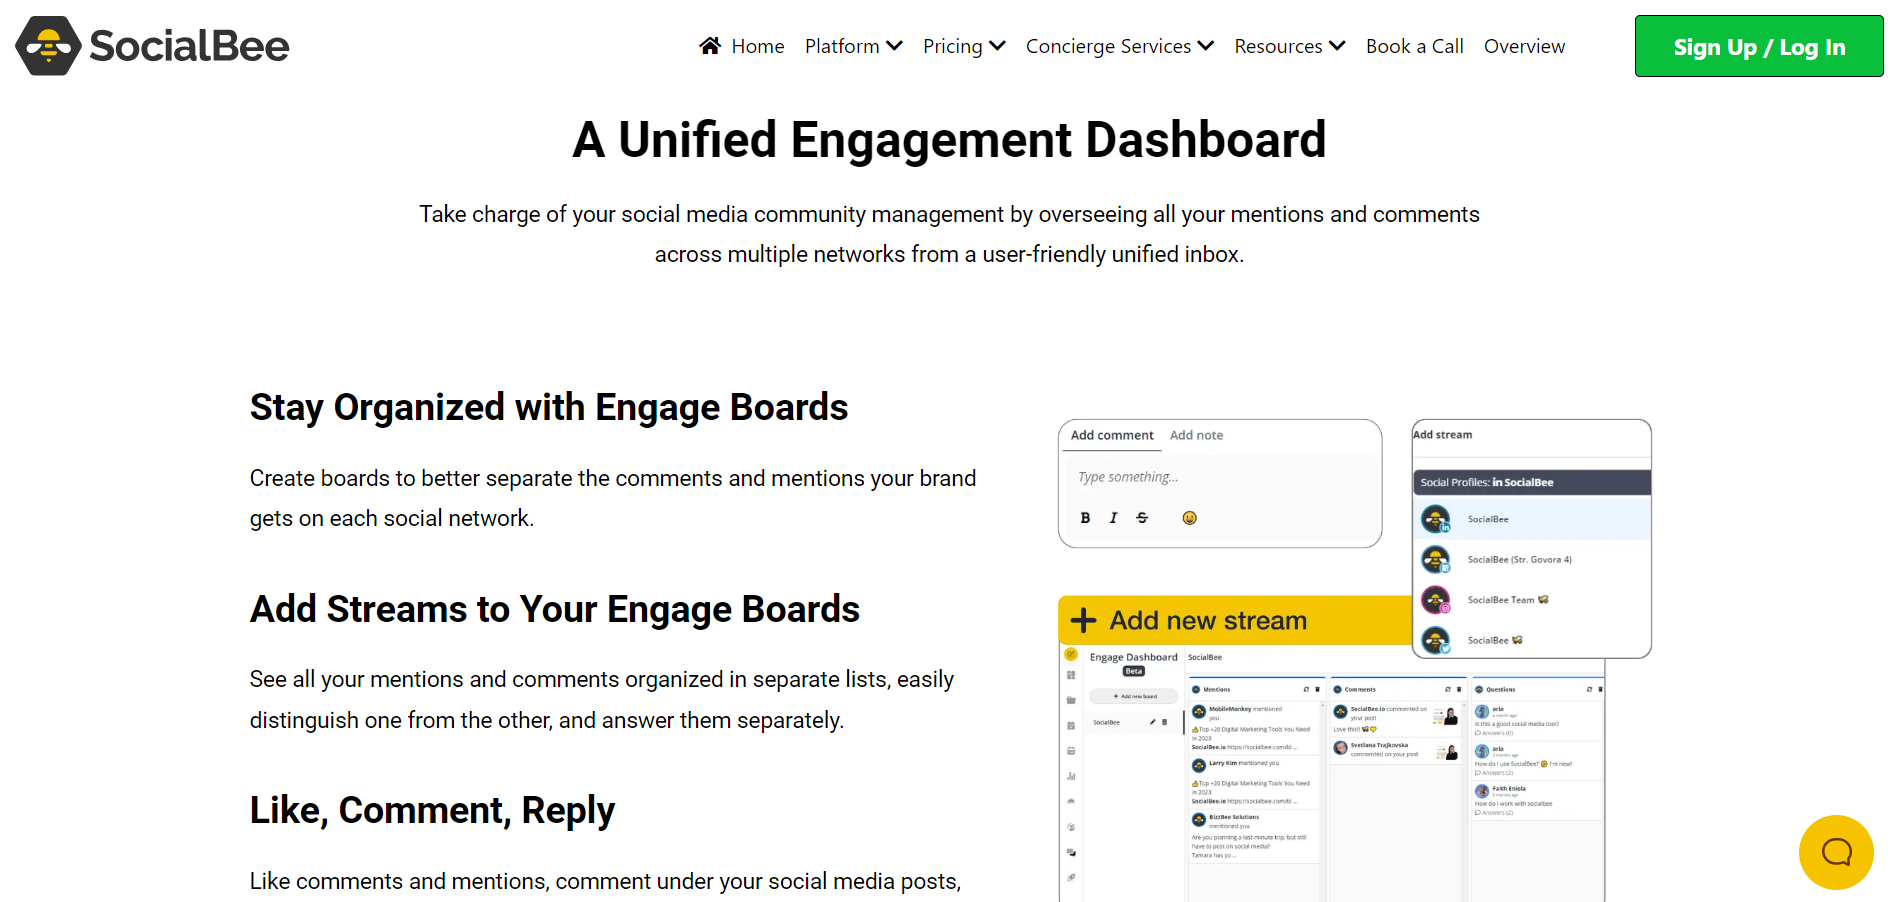 SocialBee's engagement dashboard